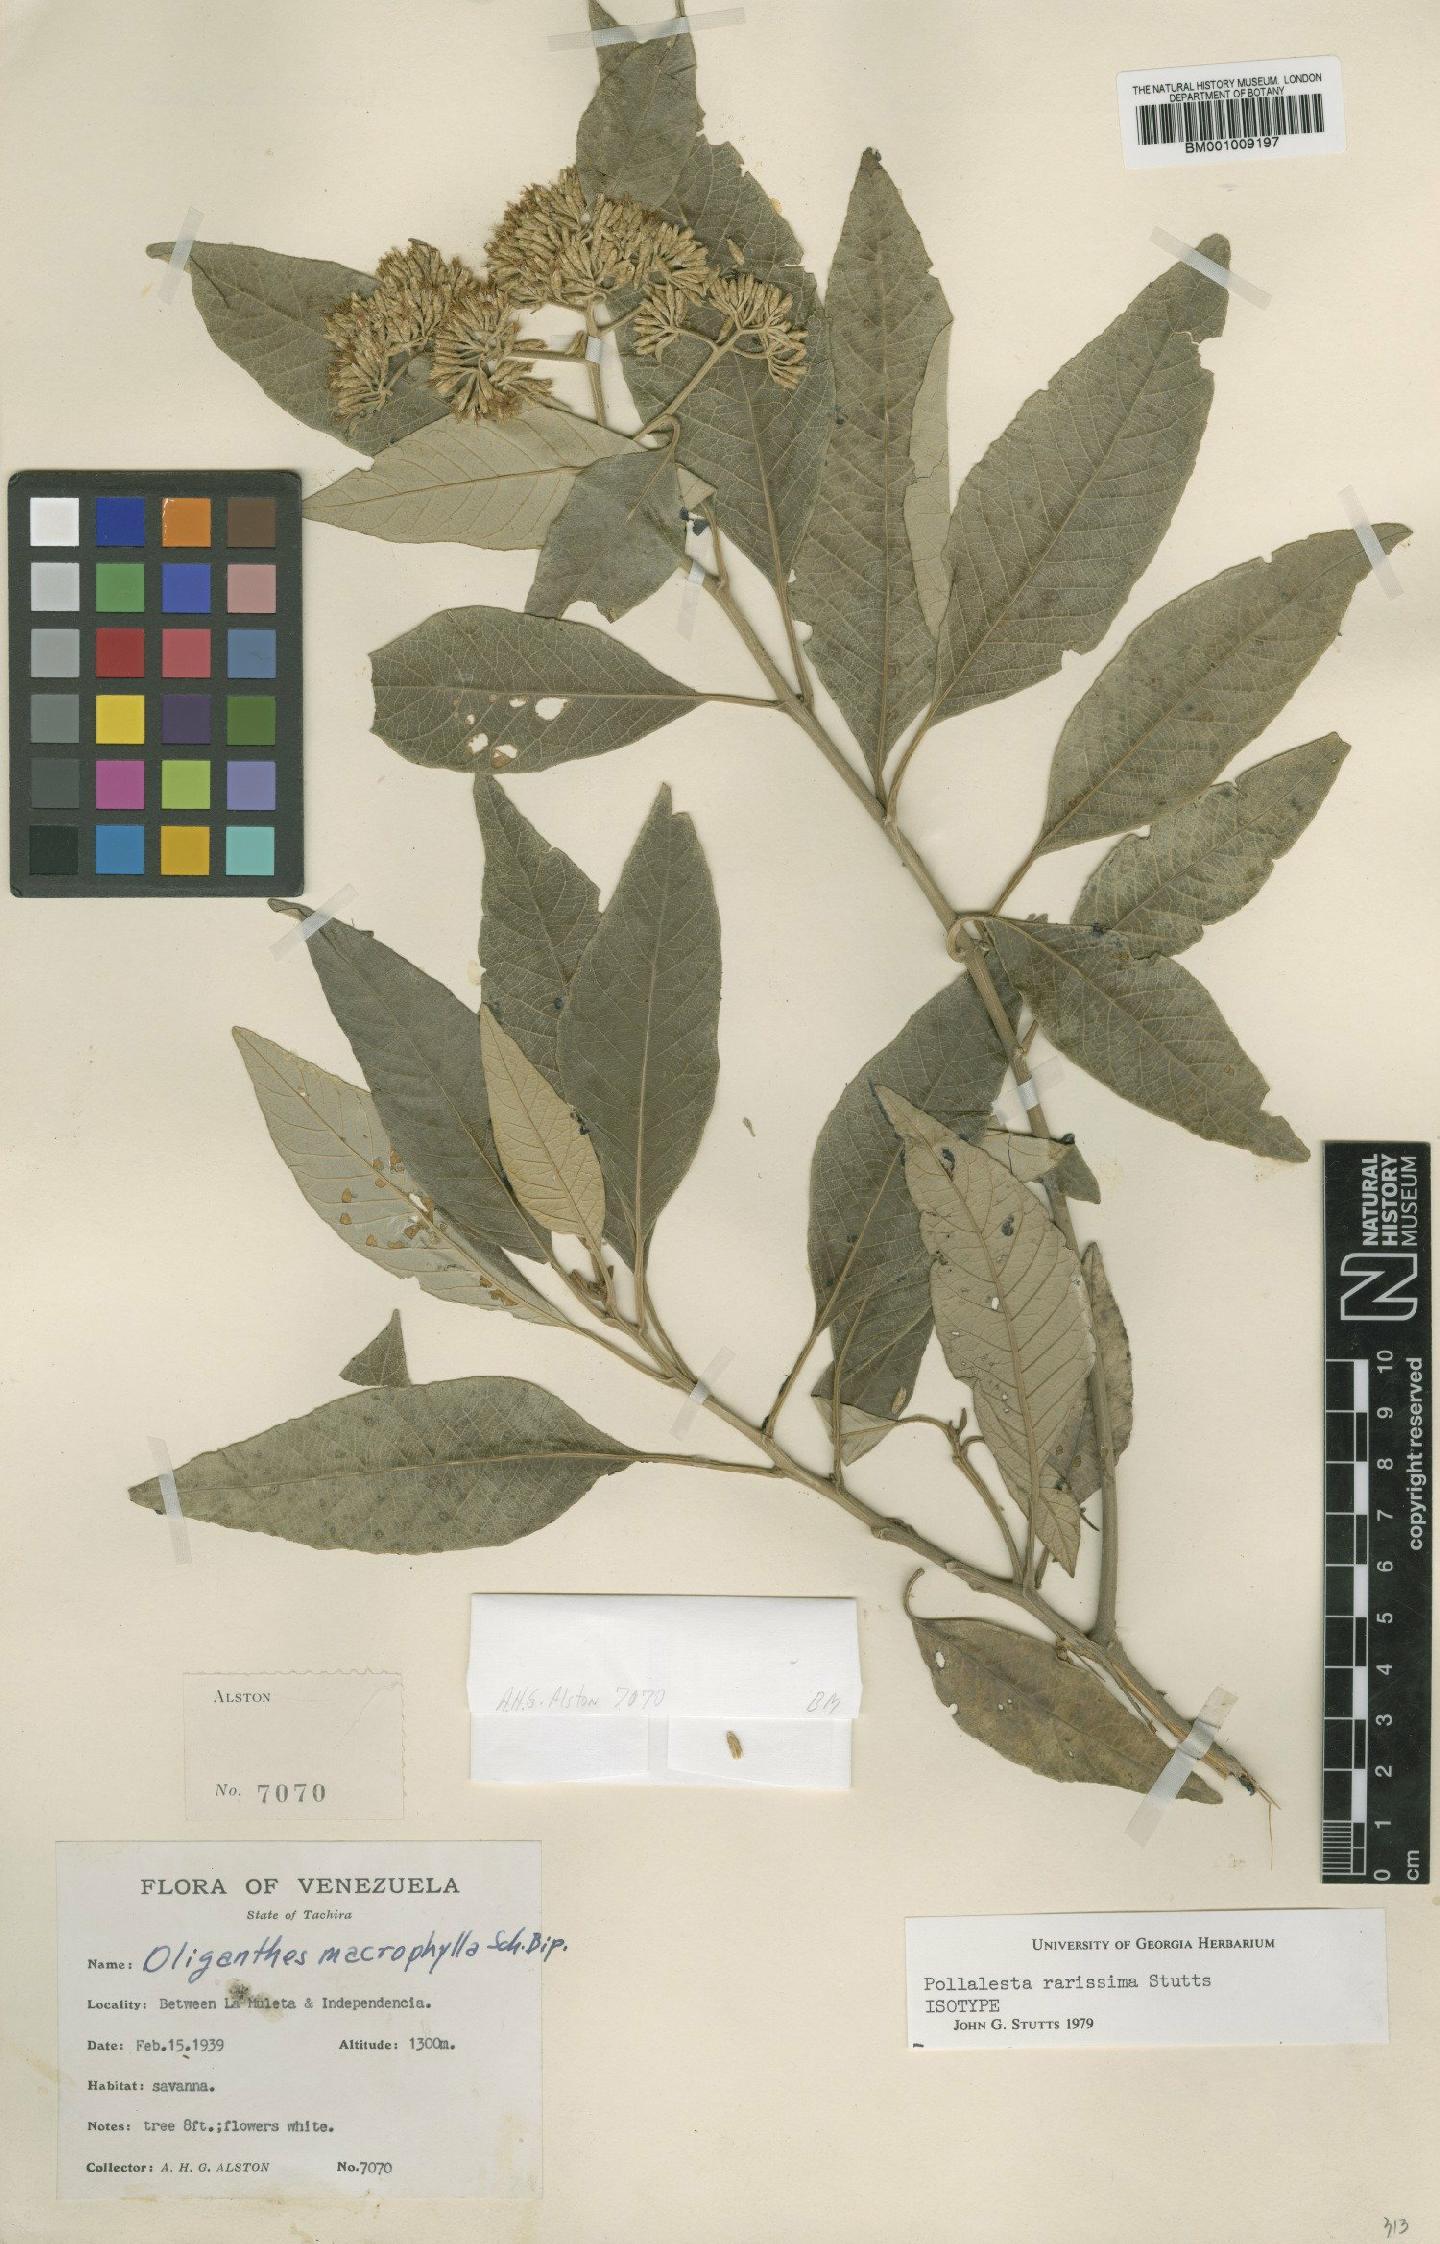 To NHMUK collection (Pollalesta rarissima Stutts; Isotype; NHMUK:ecatalogue:557257)